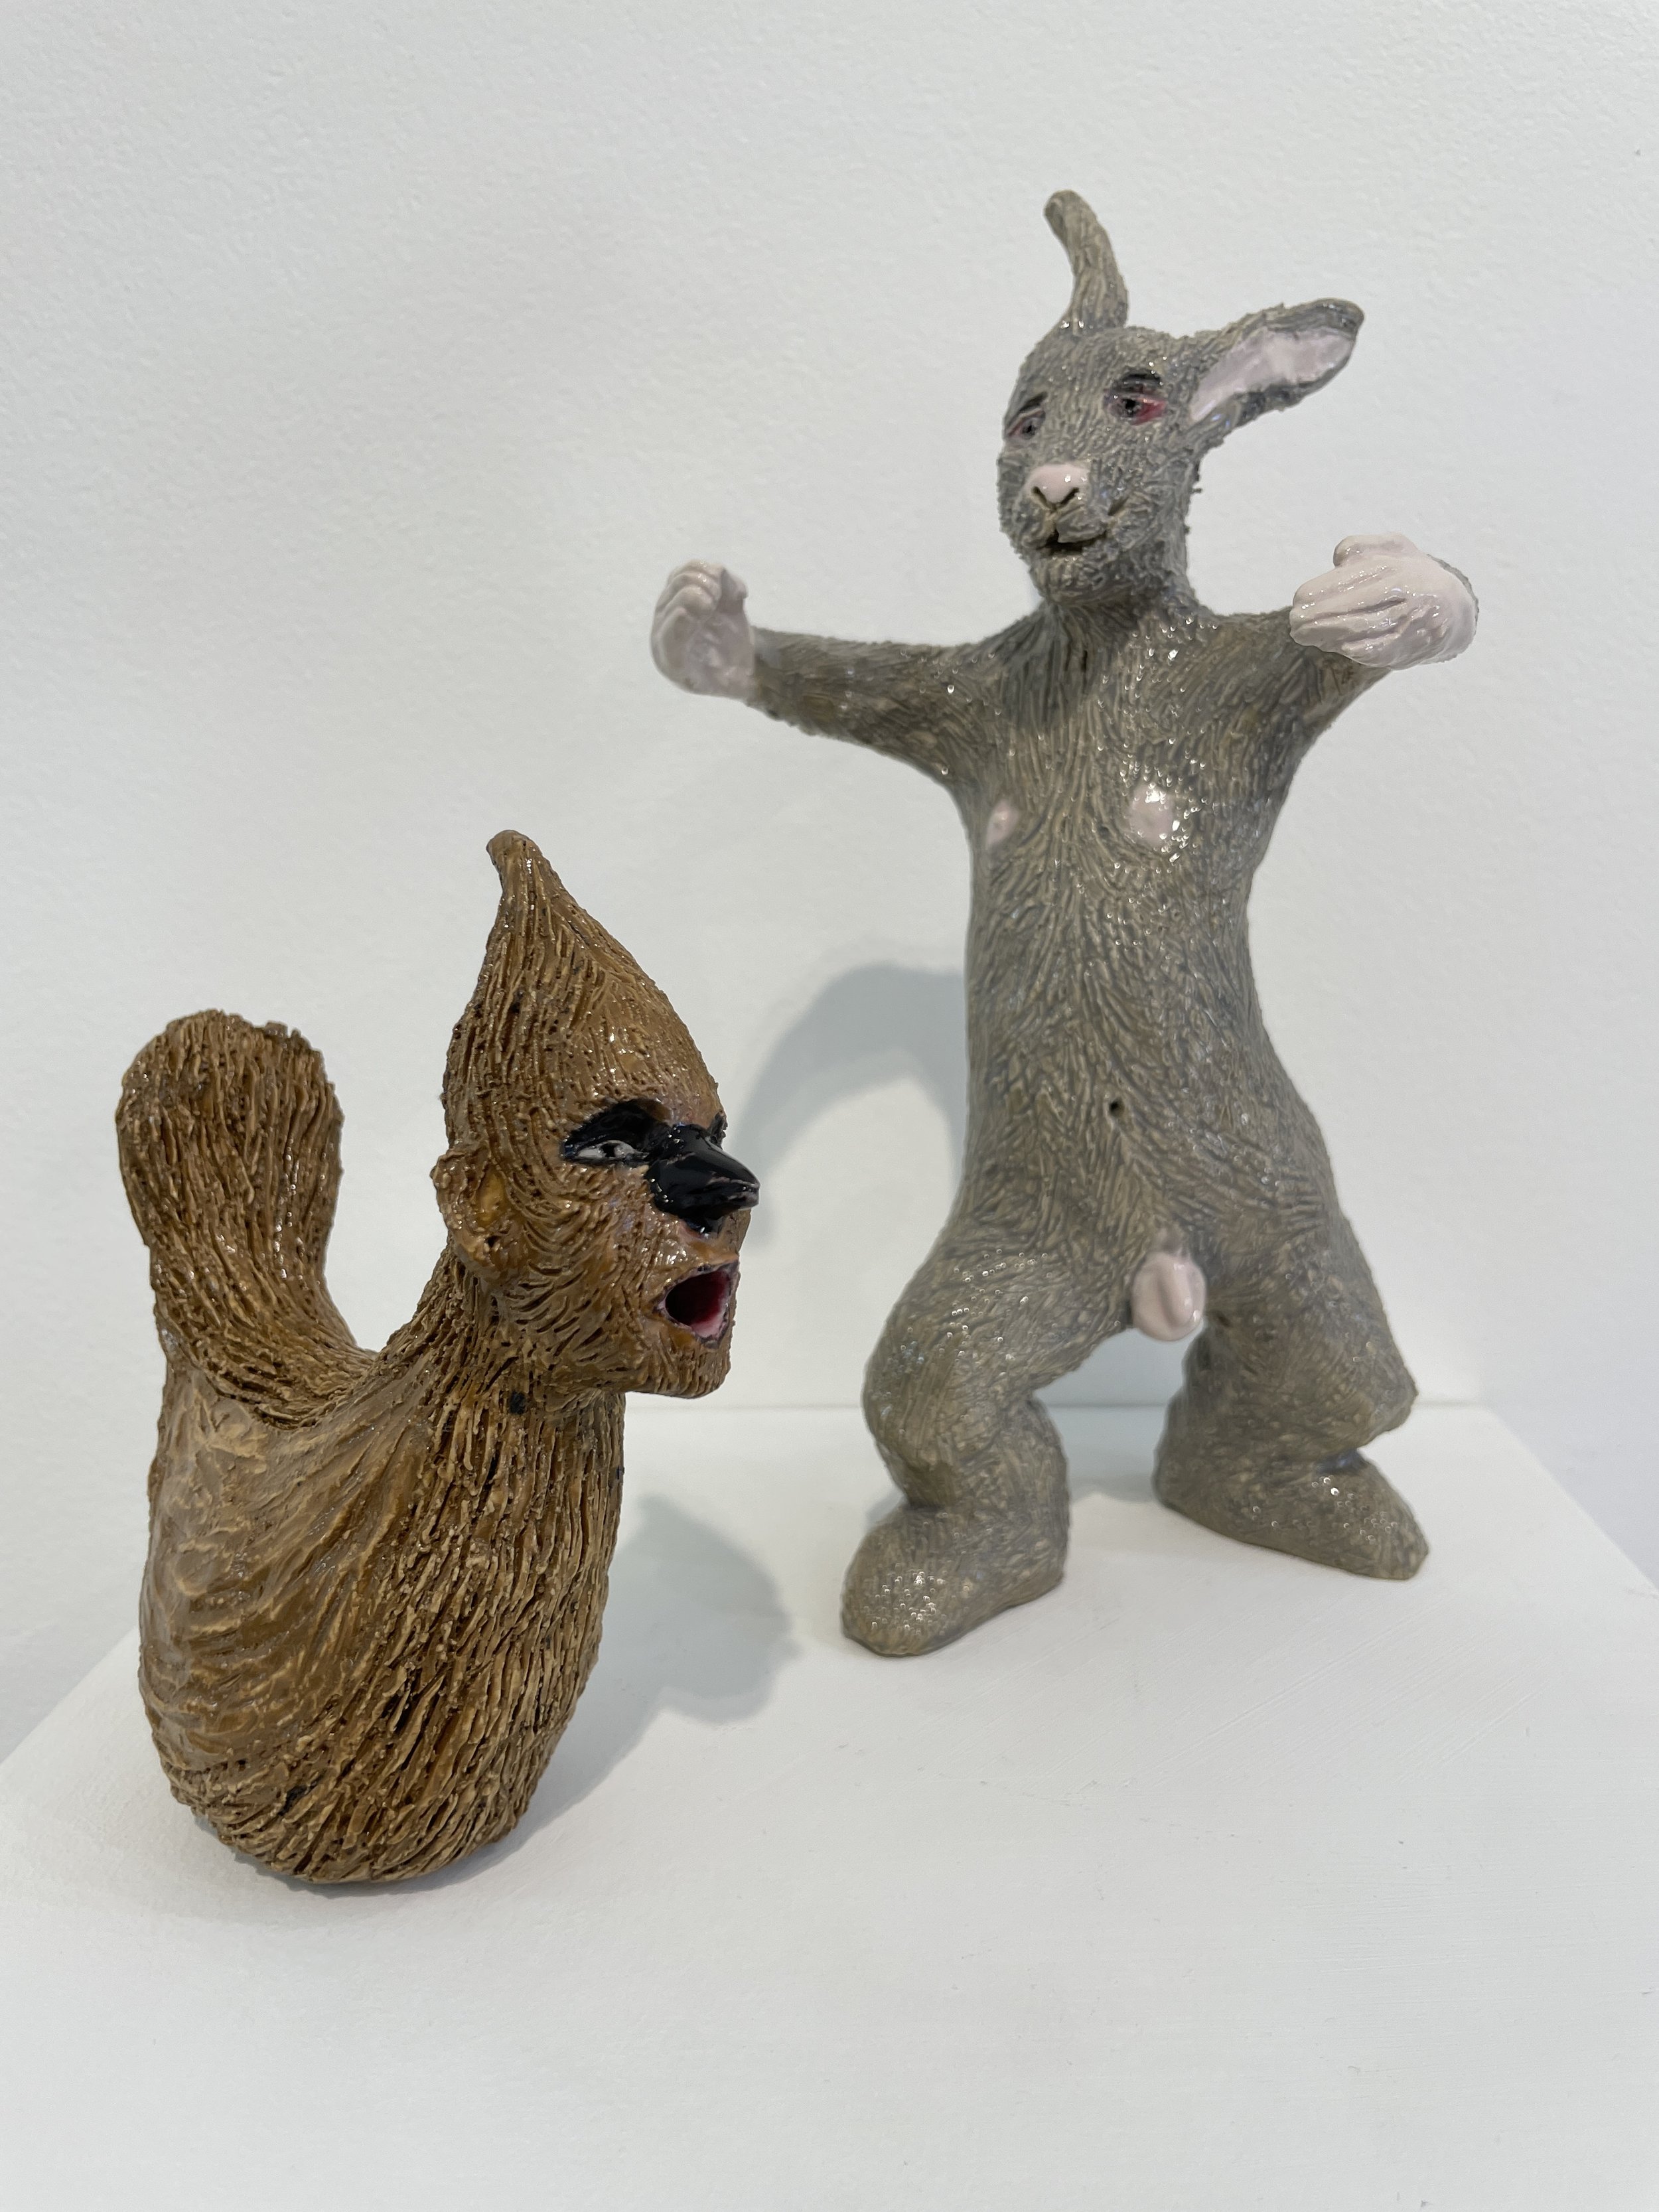 Pájaro (Bird) and Conejo (Rabbit)